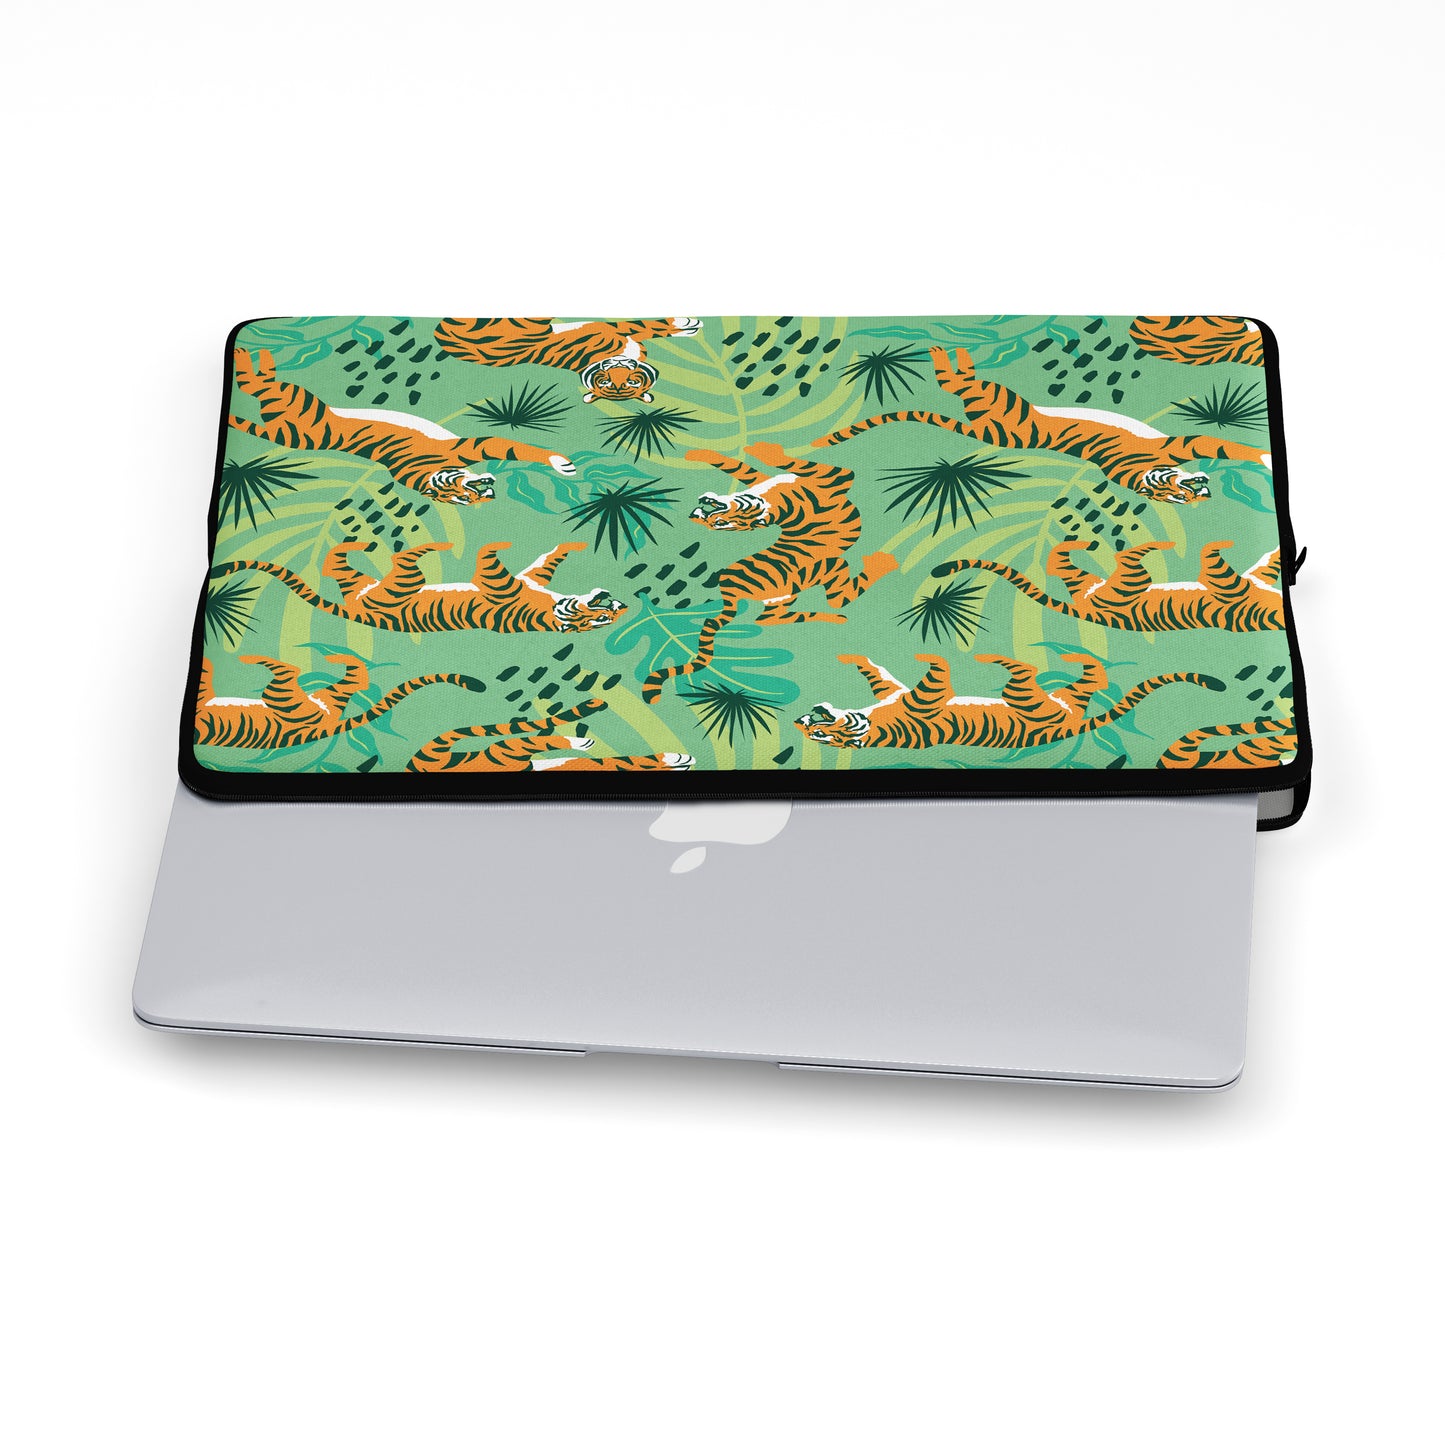 Tigers laptop sleeve